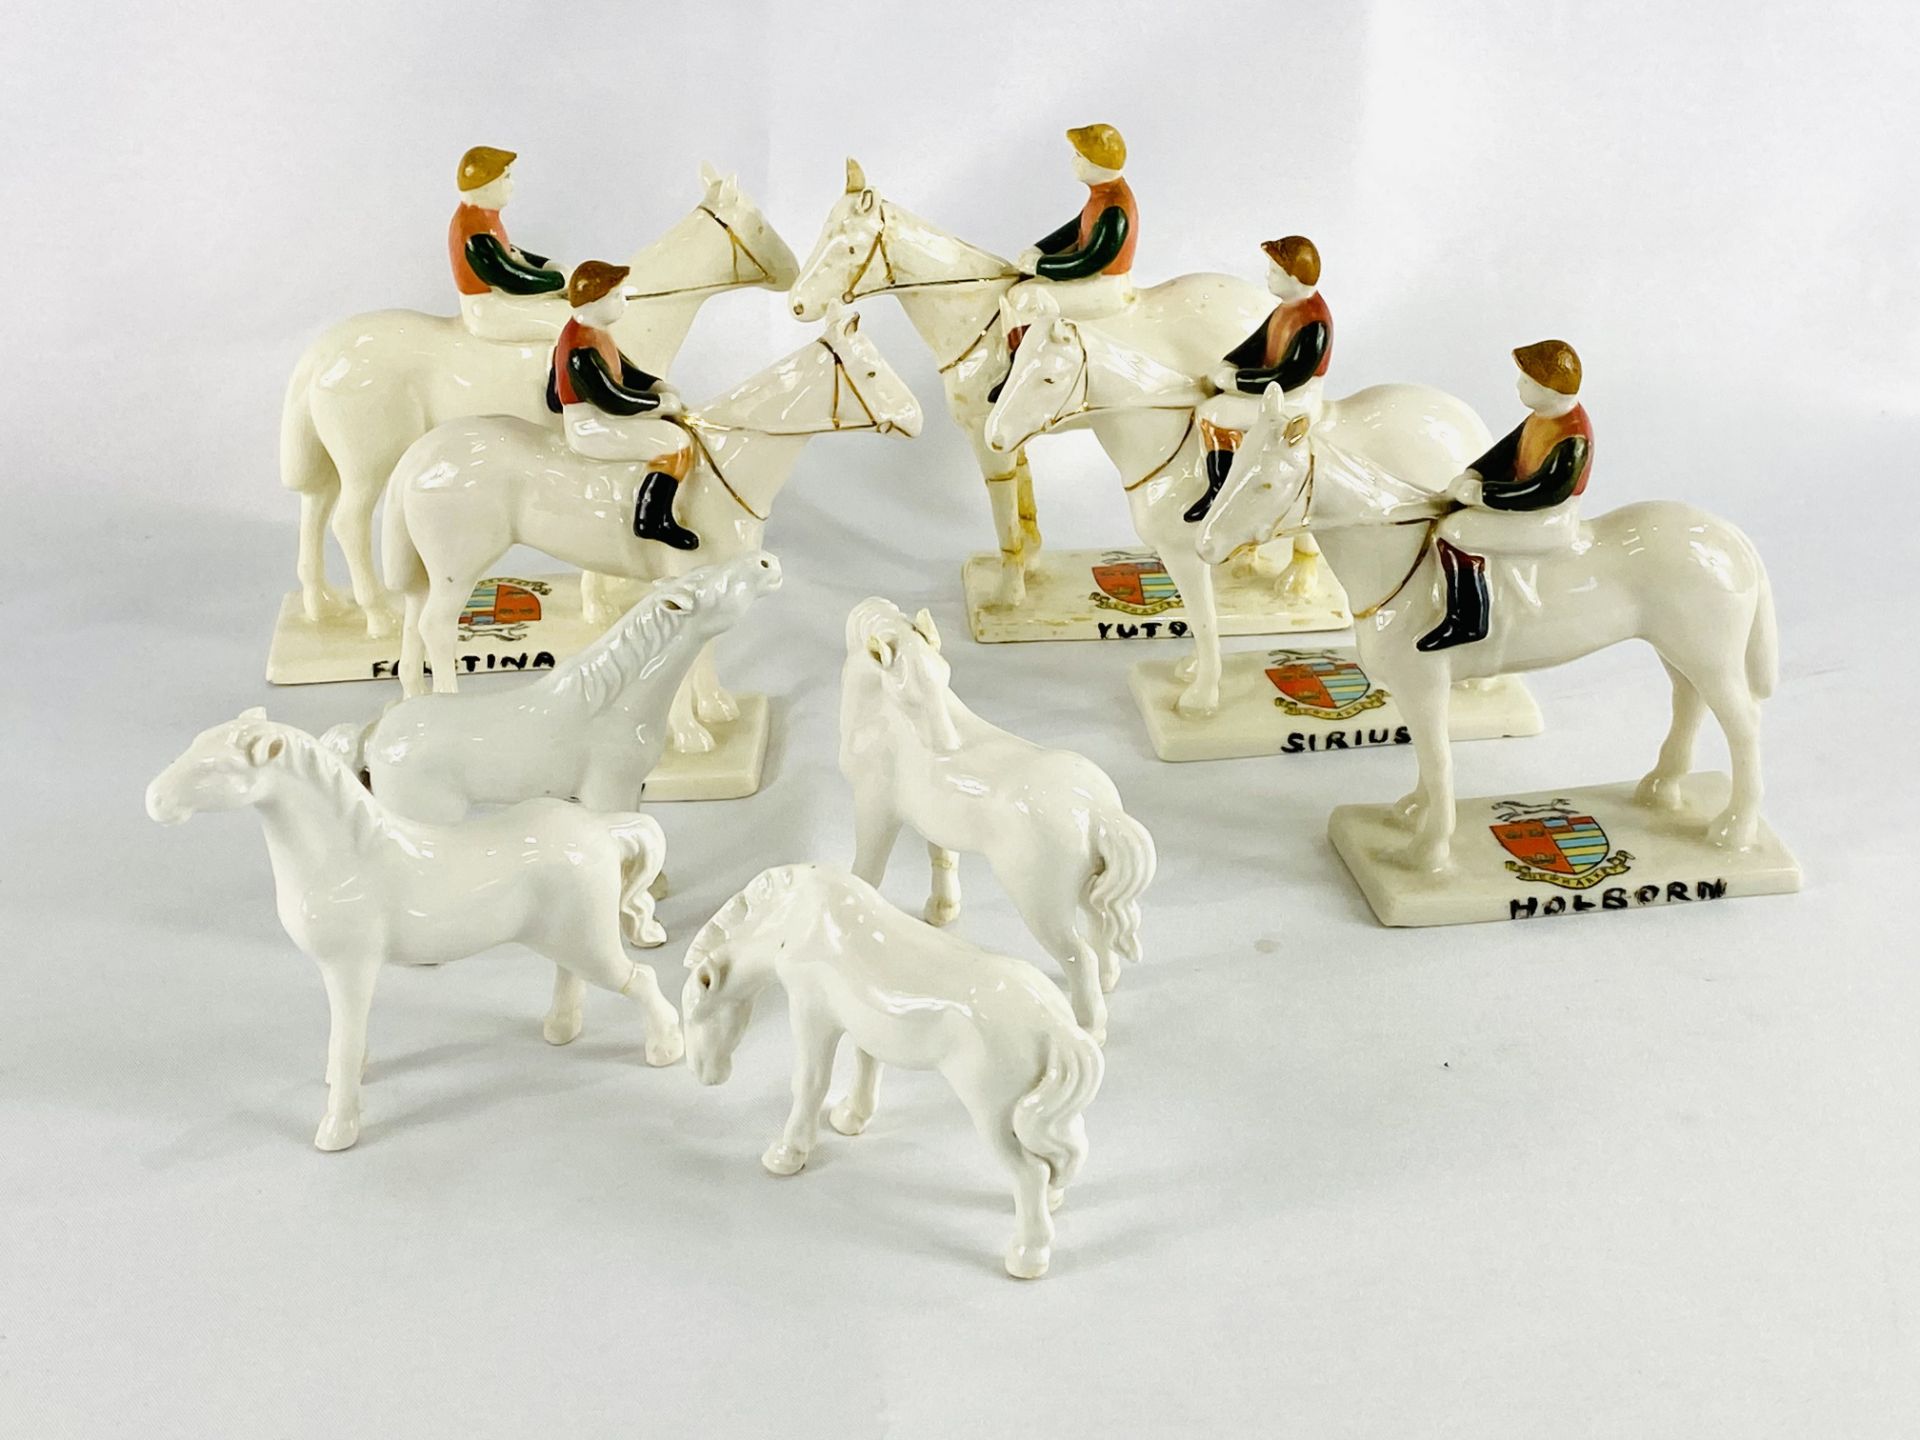 Carlton ware porcelain horses